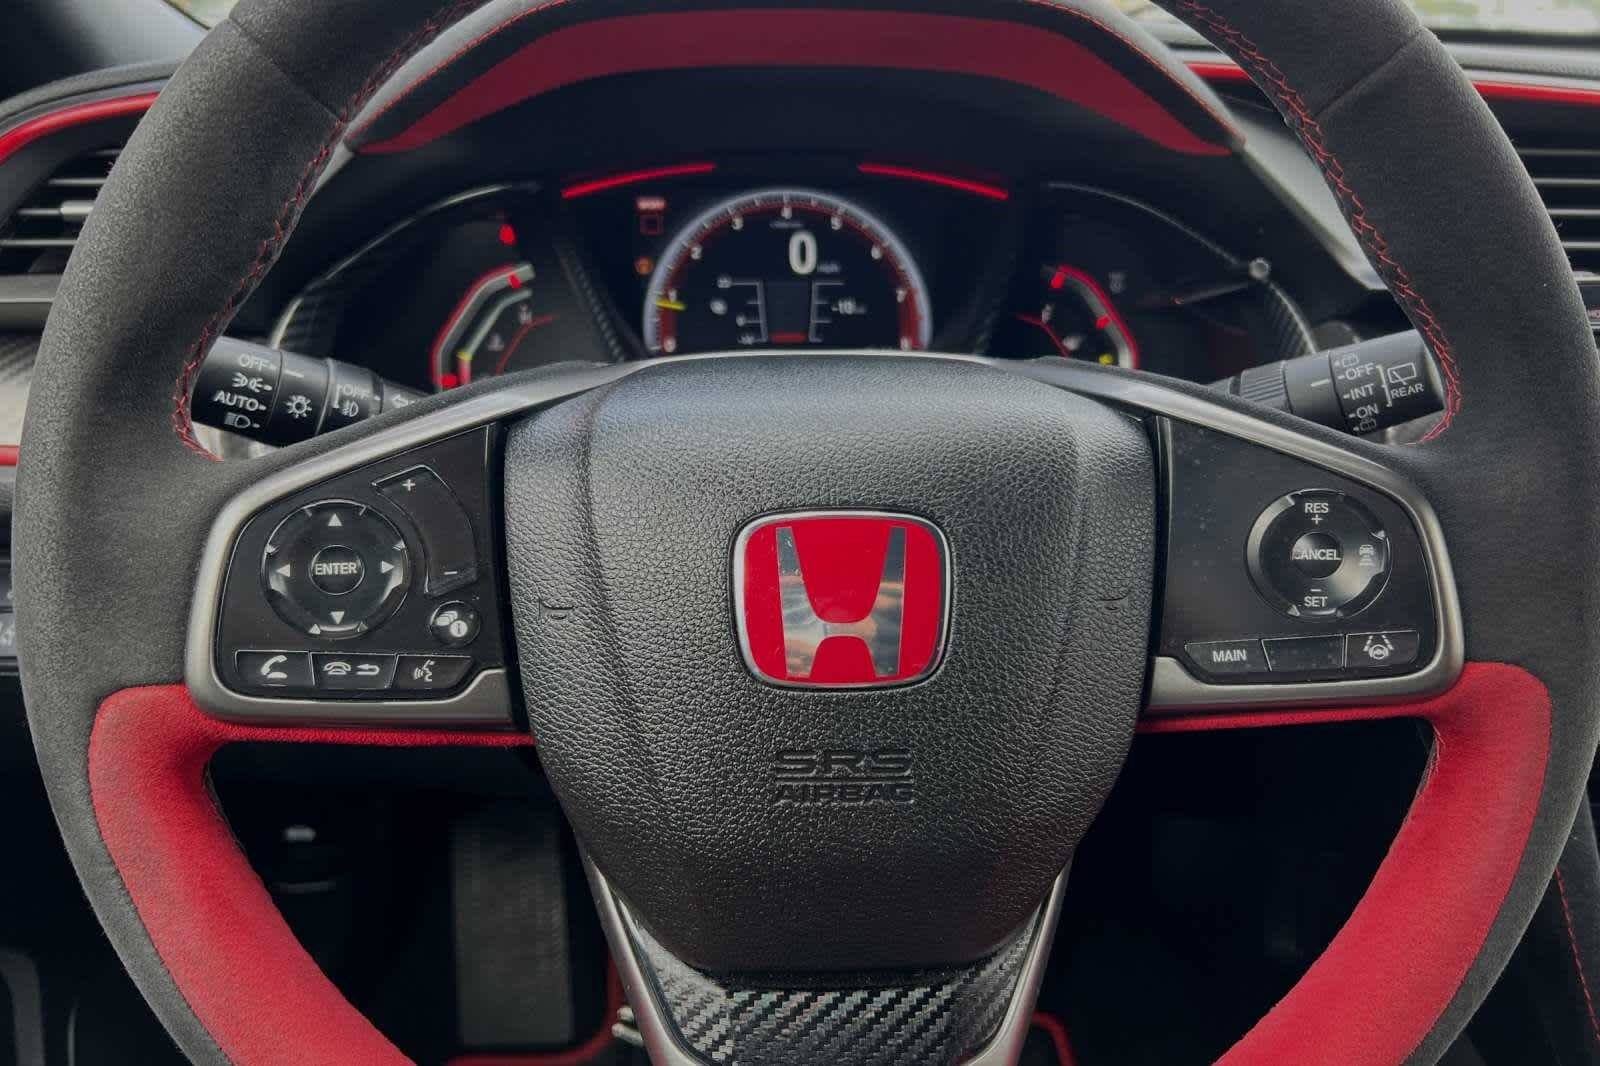 2021 Honda Civic Type R Touring